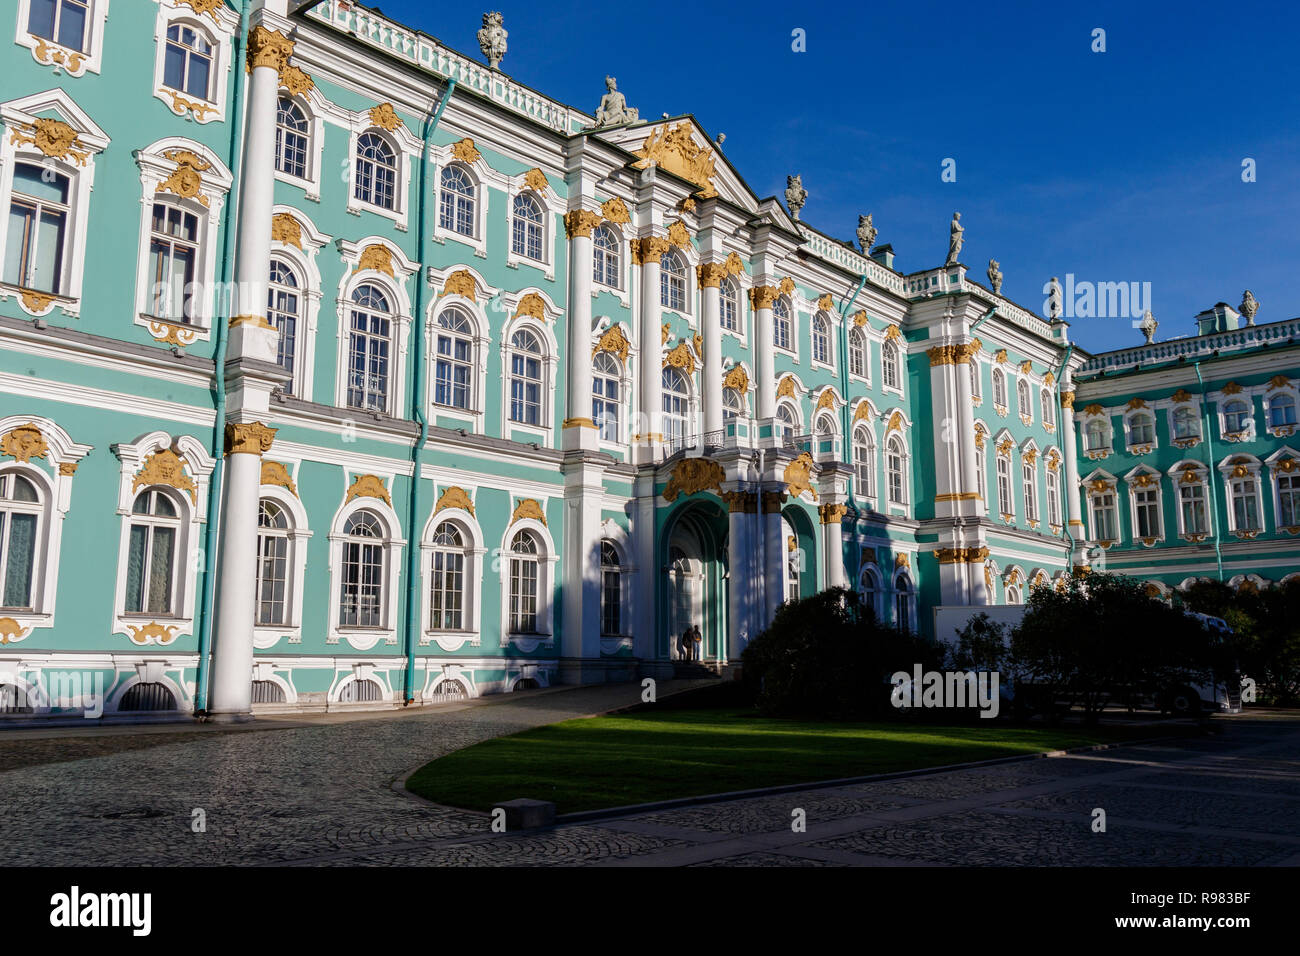 The 1762 Winter Palace and State Hermitage Museum on Palace Square, St Petersburg, Russia. Architect, Italian Francesco Bartolomeo Rastrelli. Stock Photo